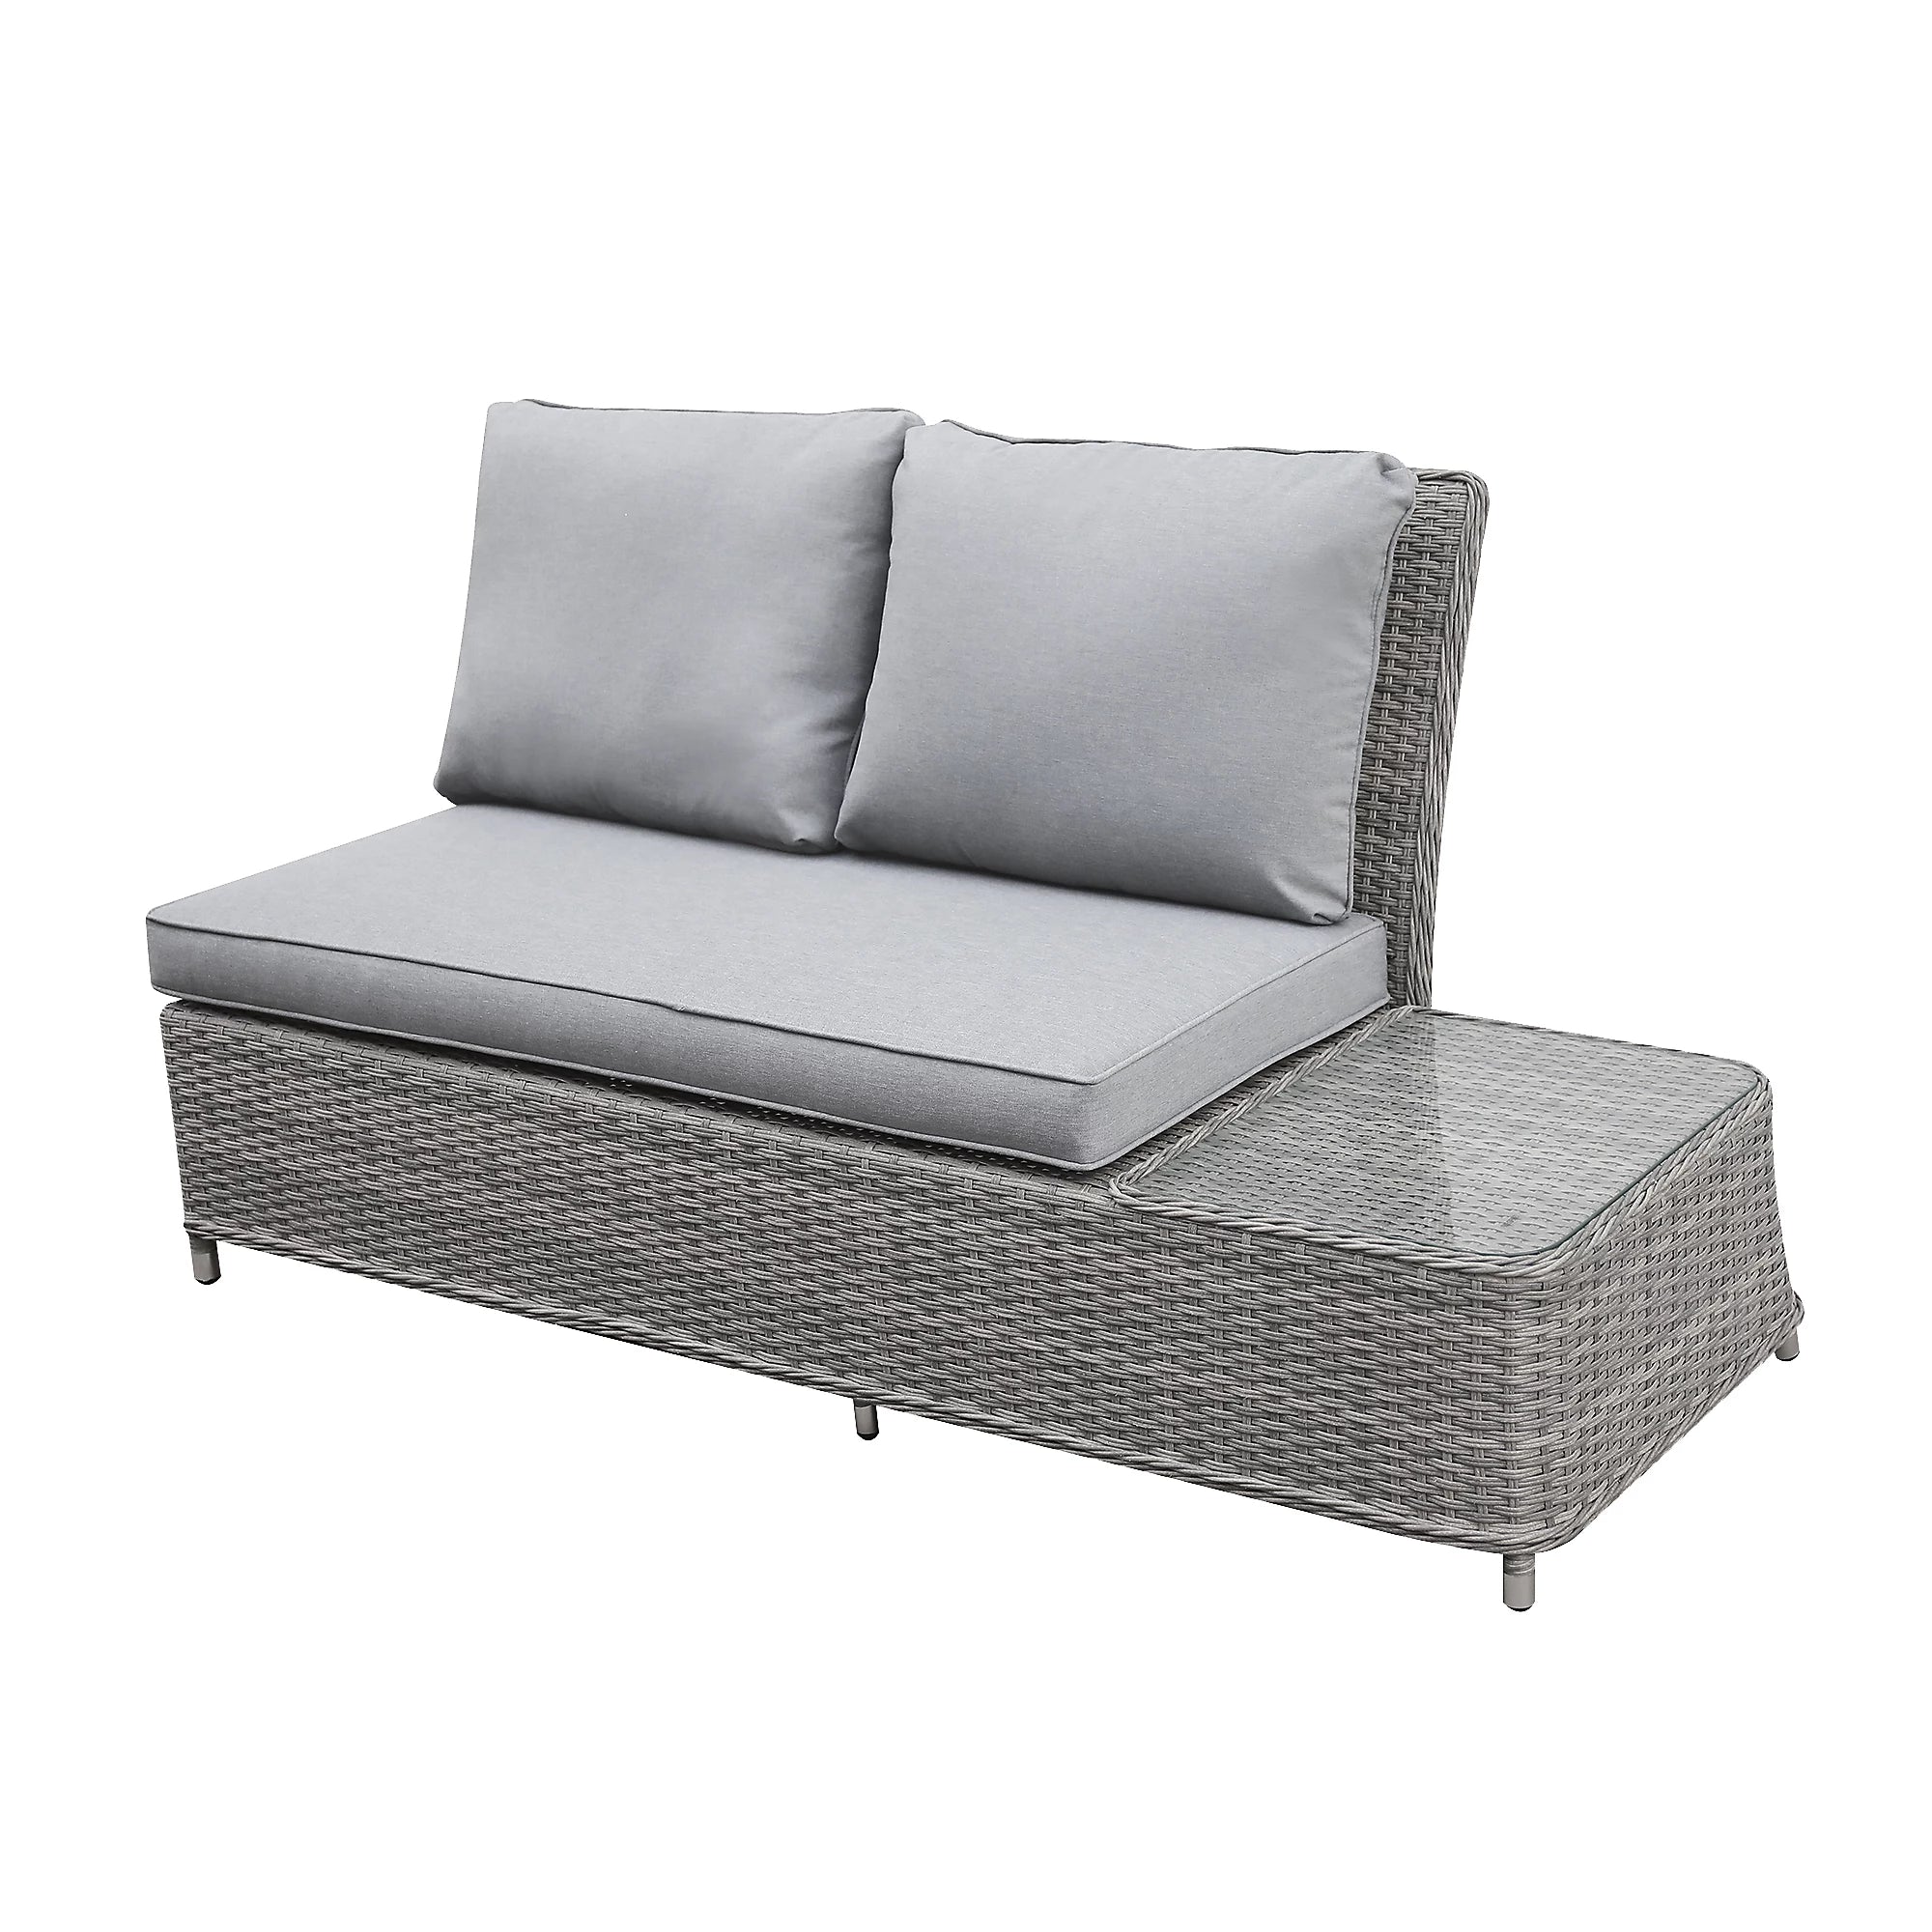 GoodHome Hamilton Steeple grey Rattan effect 5 Seater Coffee set - Rattan Garden Furniture 2619